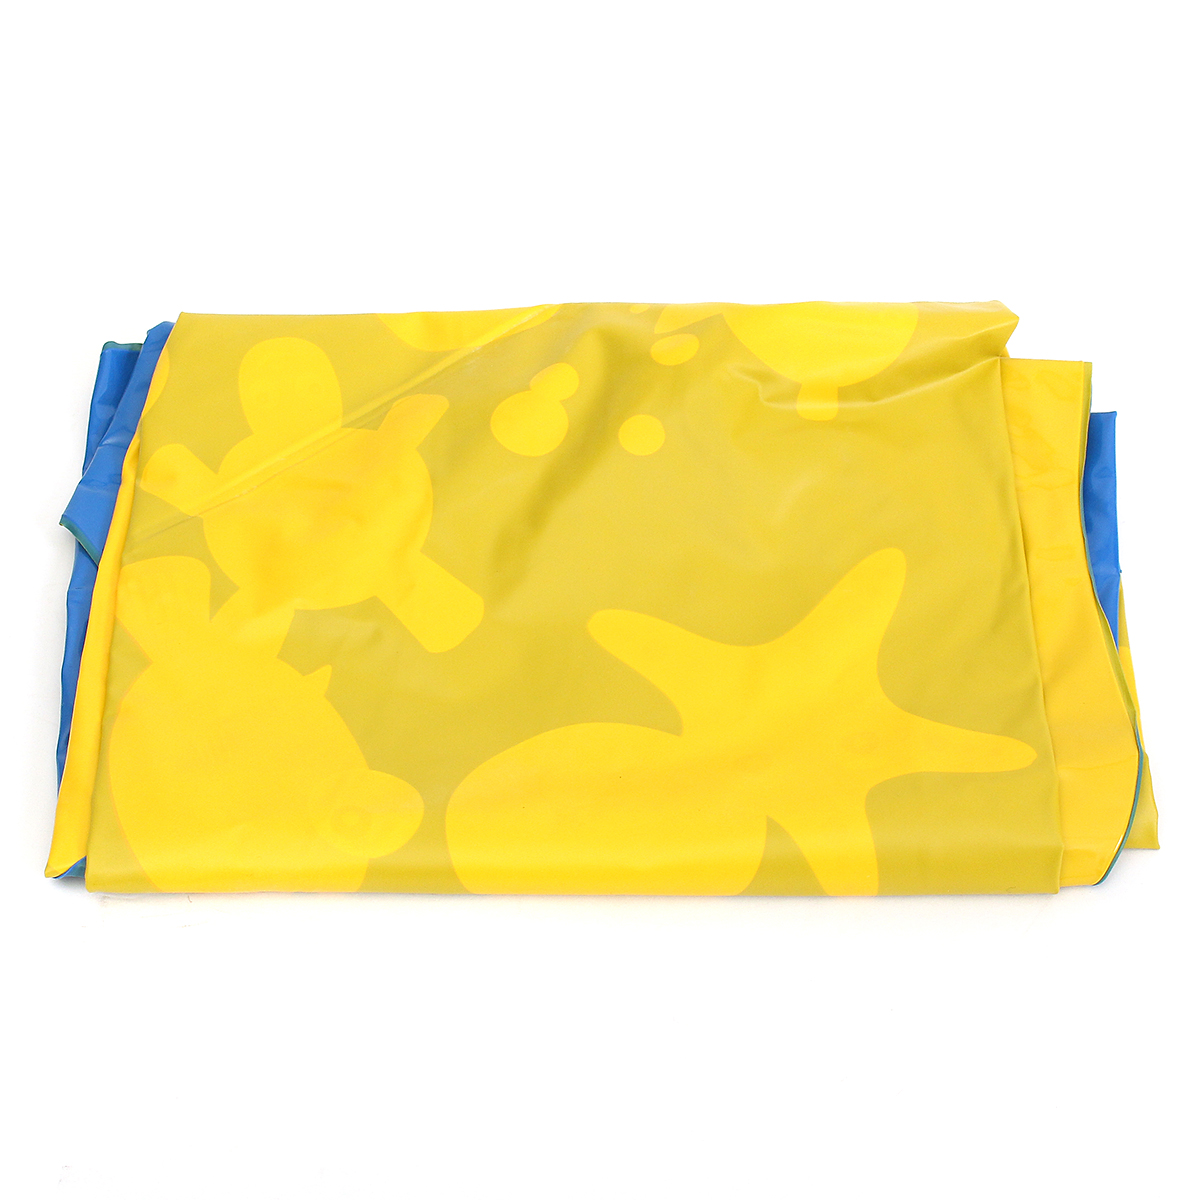 Inflatable-Splash-Water-Mat-Sprinkle-Splash-Play-Mat-Fun-Summer-Spray-ToysInflatable-Pad-Outdoor-Wat-1868724-14